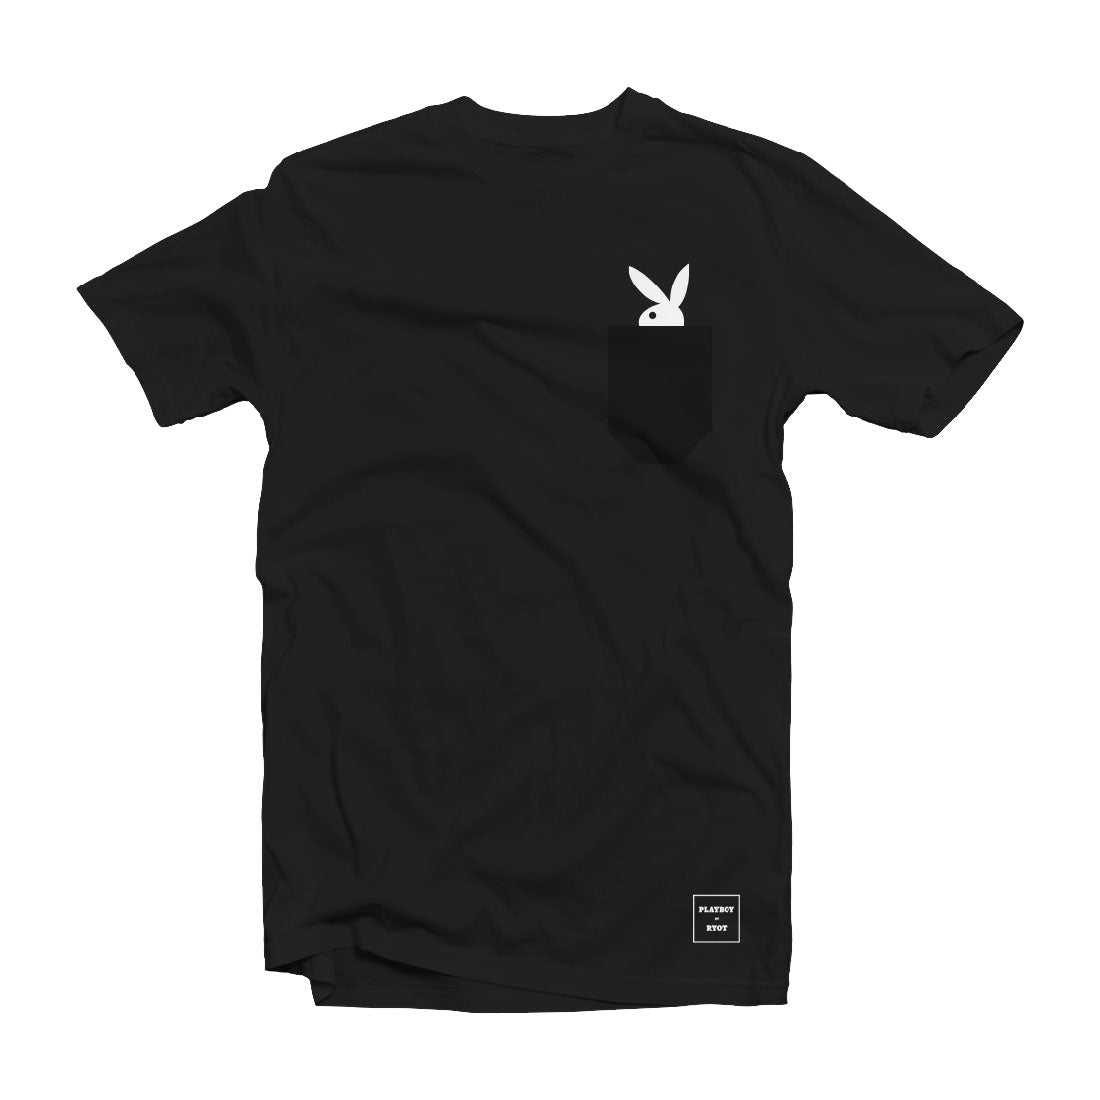 Playboy Pocket Black T-Shirt